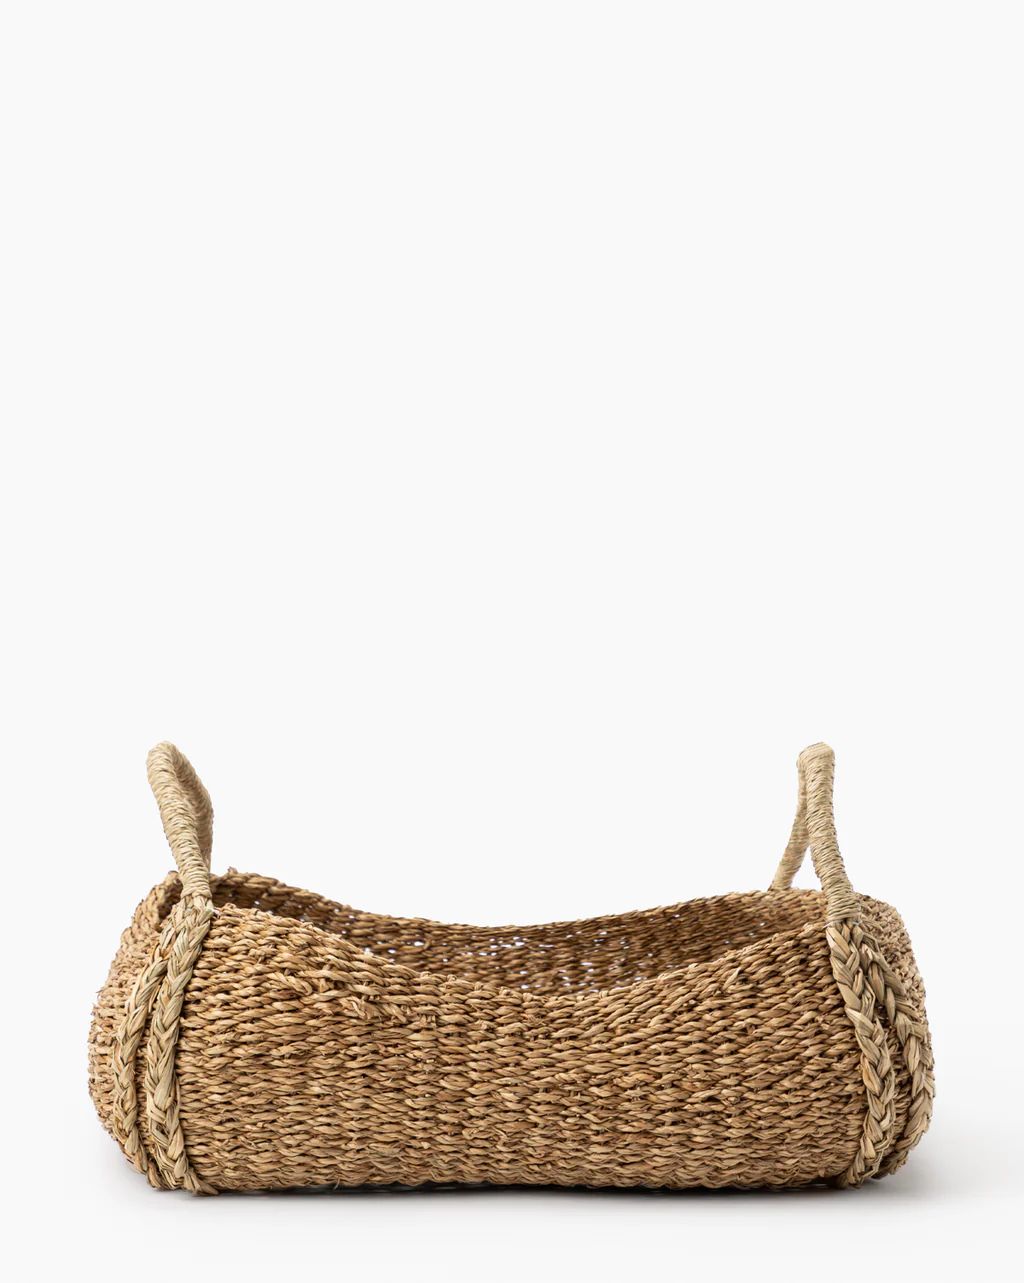 Kamali Seagrass Basket | McGee & Co.